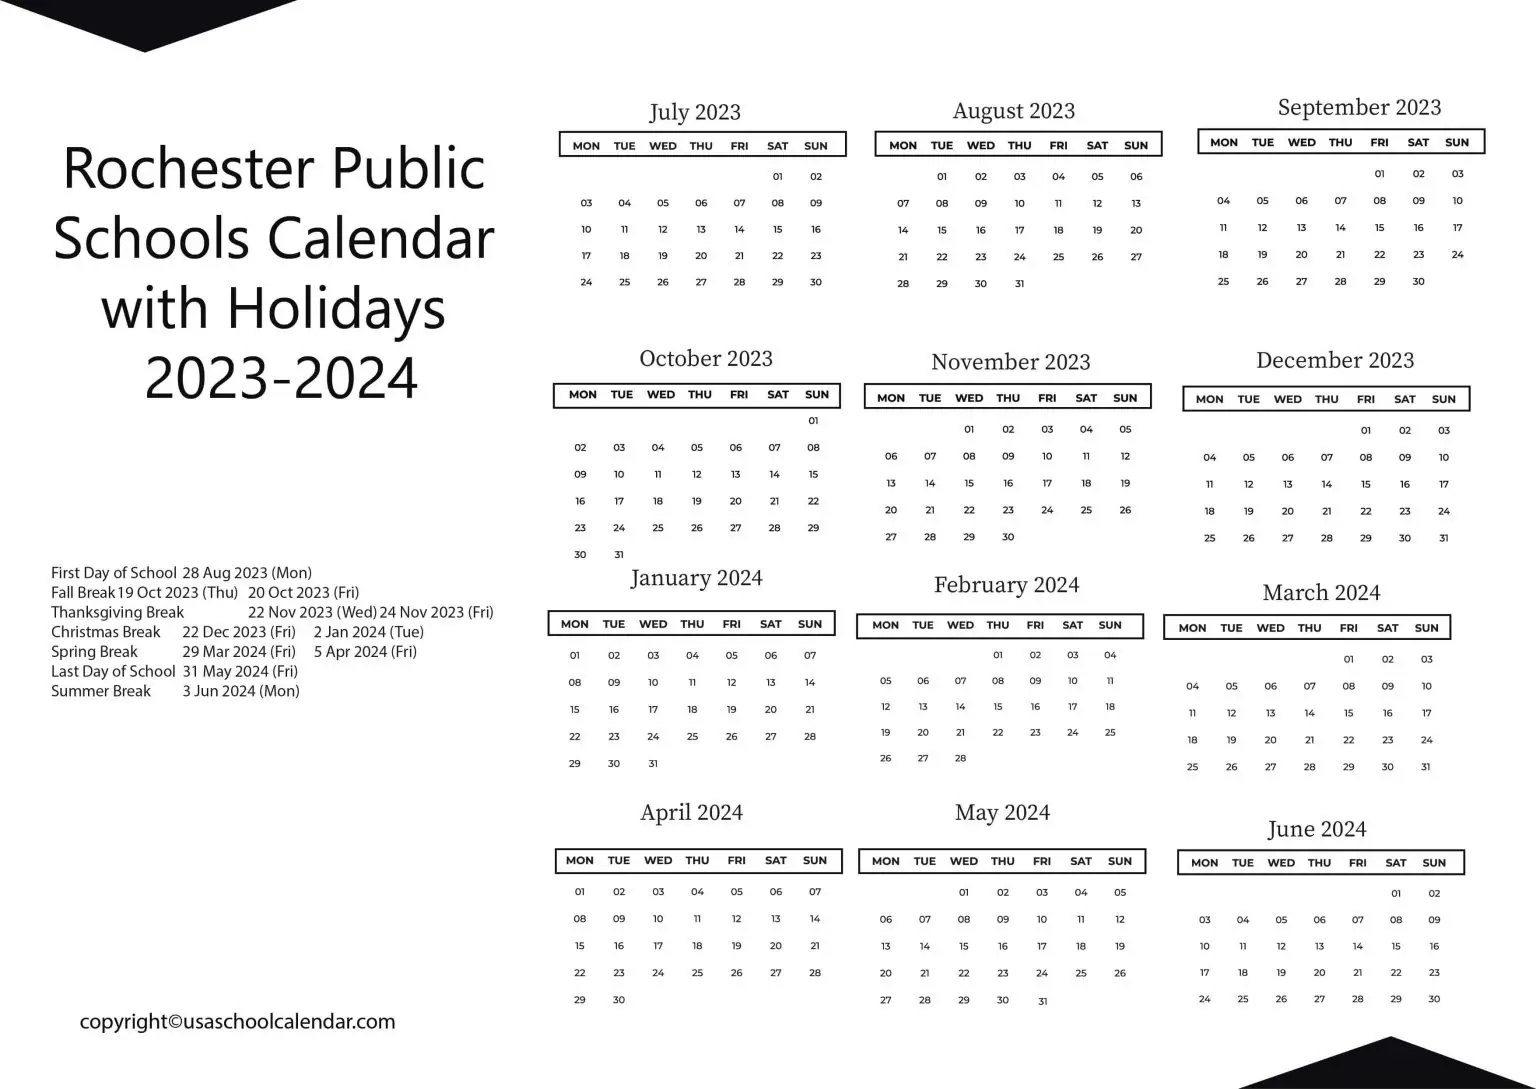 minneapolis-public-schools-calendar-2015-16